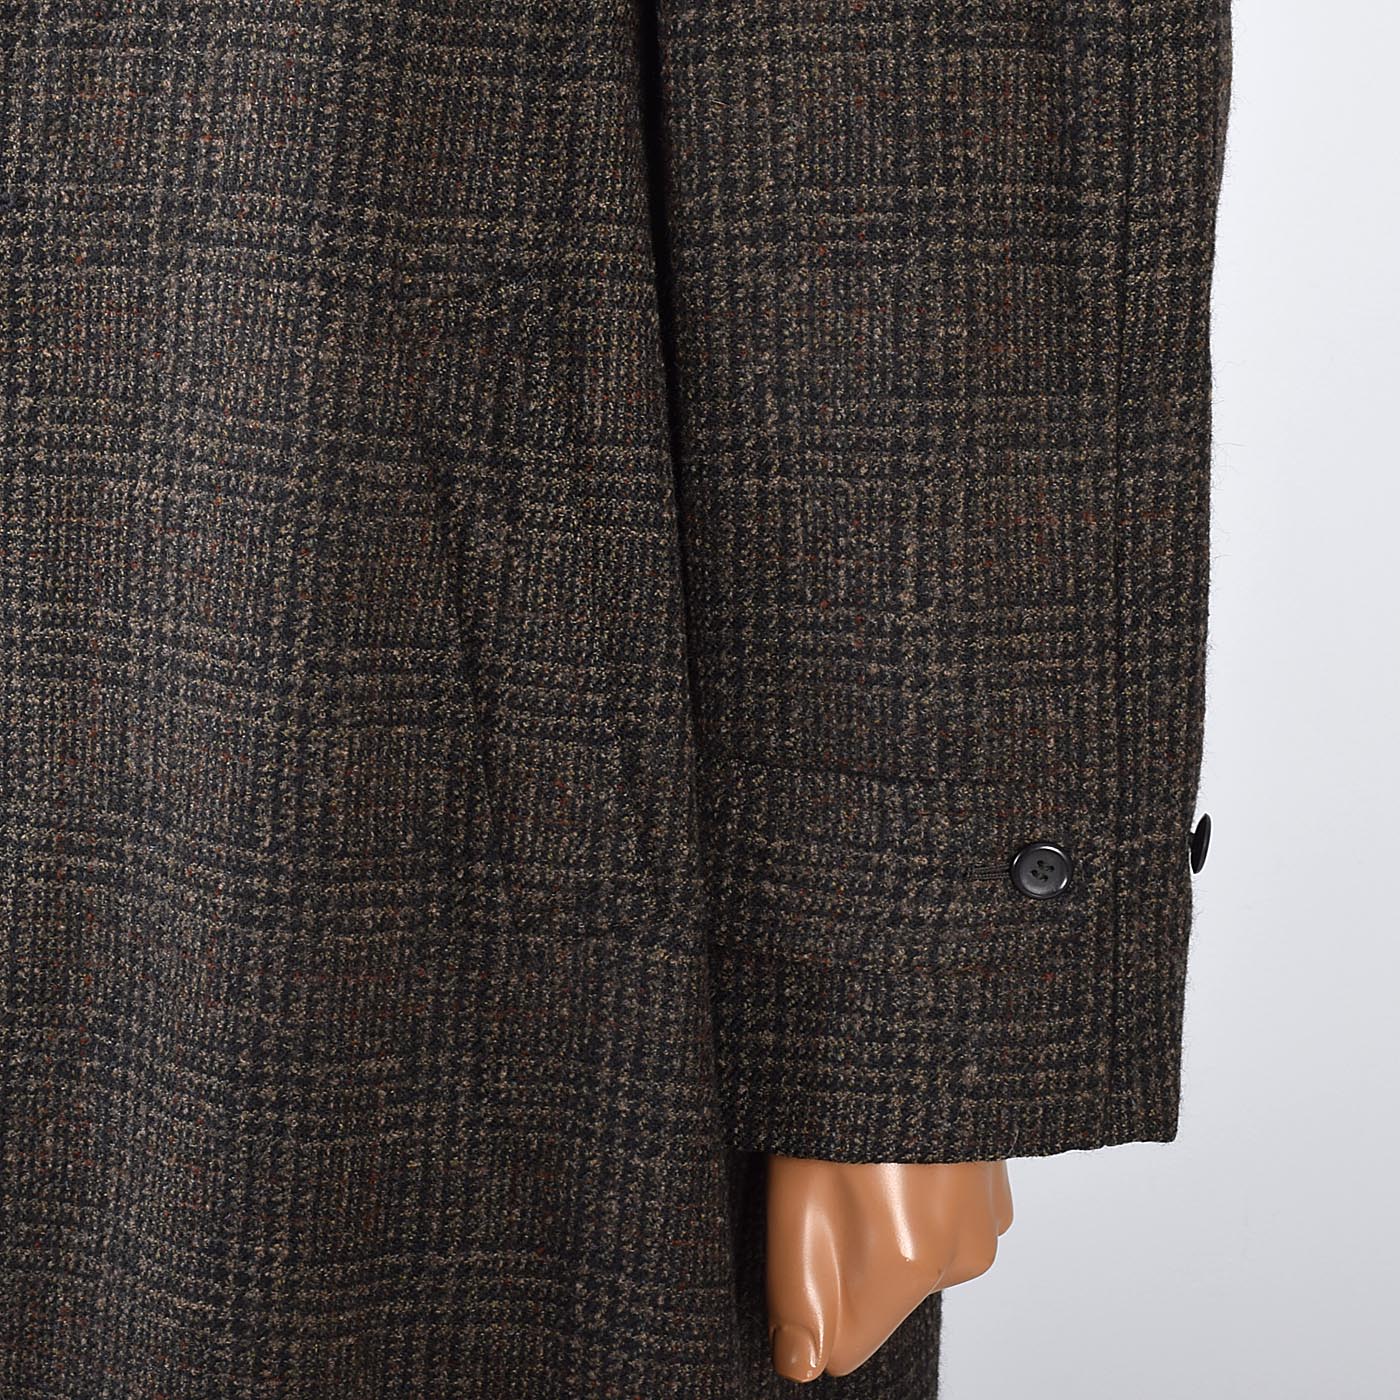 1950s Mens Brown Wool Coat with Windowpane Plaid